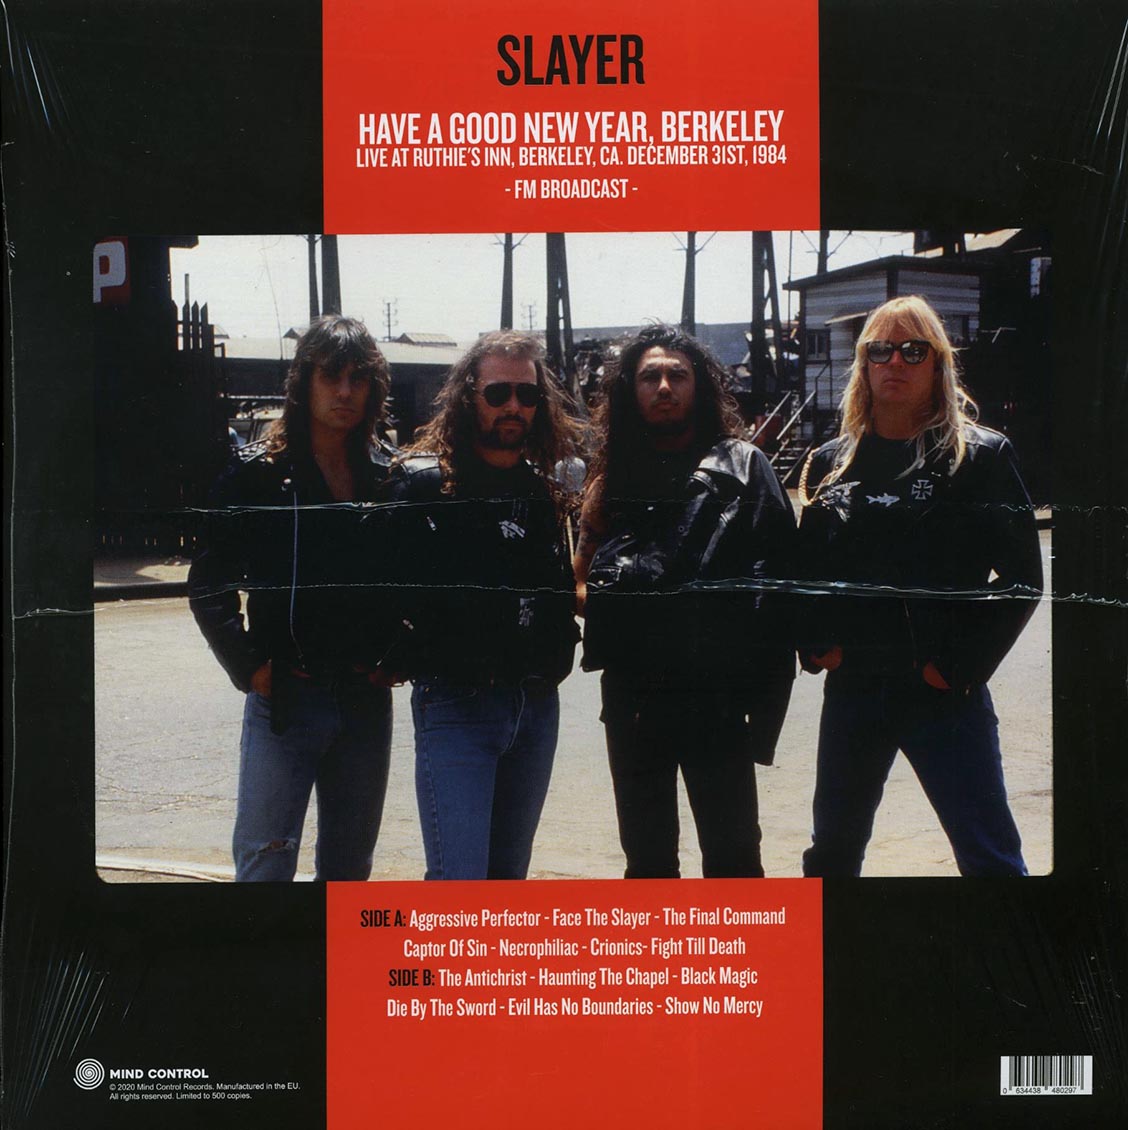 Slayer - Have A Good New Year, Berkeley: Live At Ruthie's Inn, Berkeley, CA December 31st, 1984 (ltd. 500 copies made) - Vinyl LP, LP